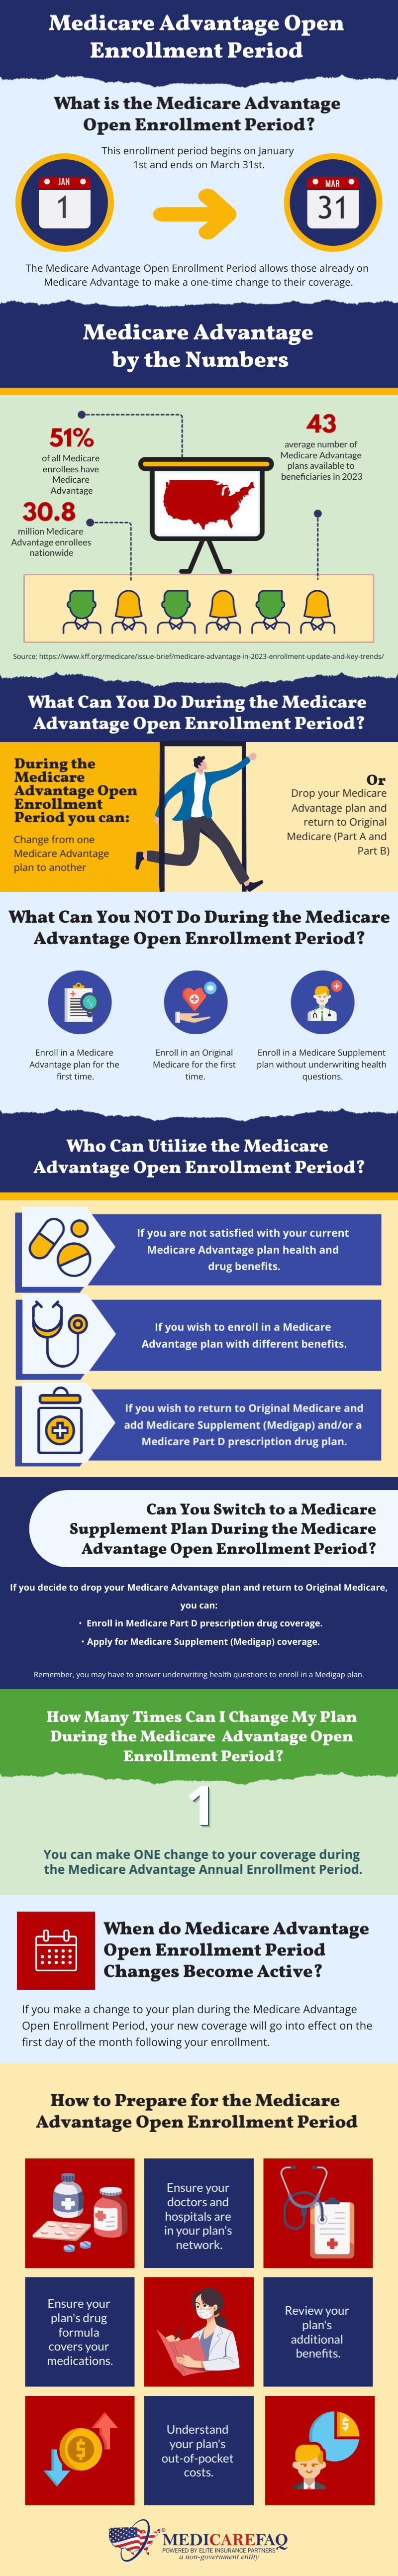 Medicare Advantage Open Enrollment Long Form